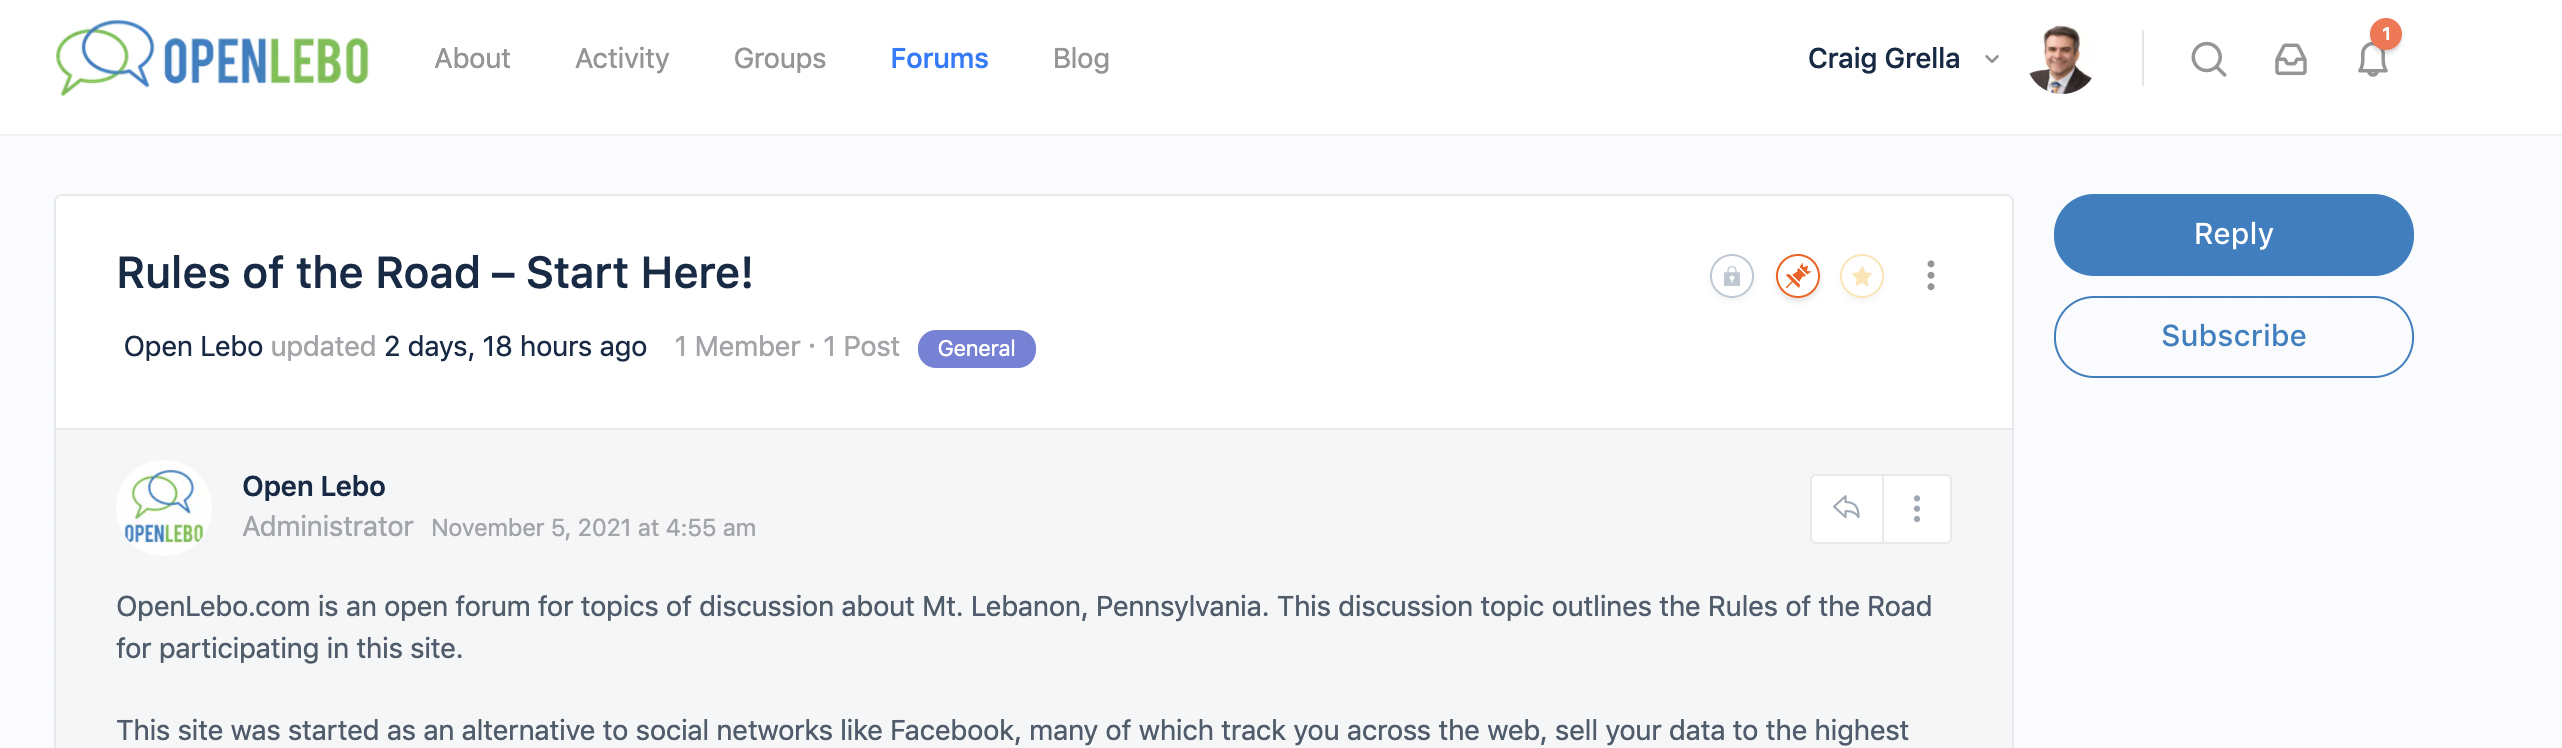 Open Lebo Screenshot - Forum Reply Button